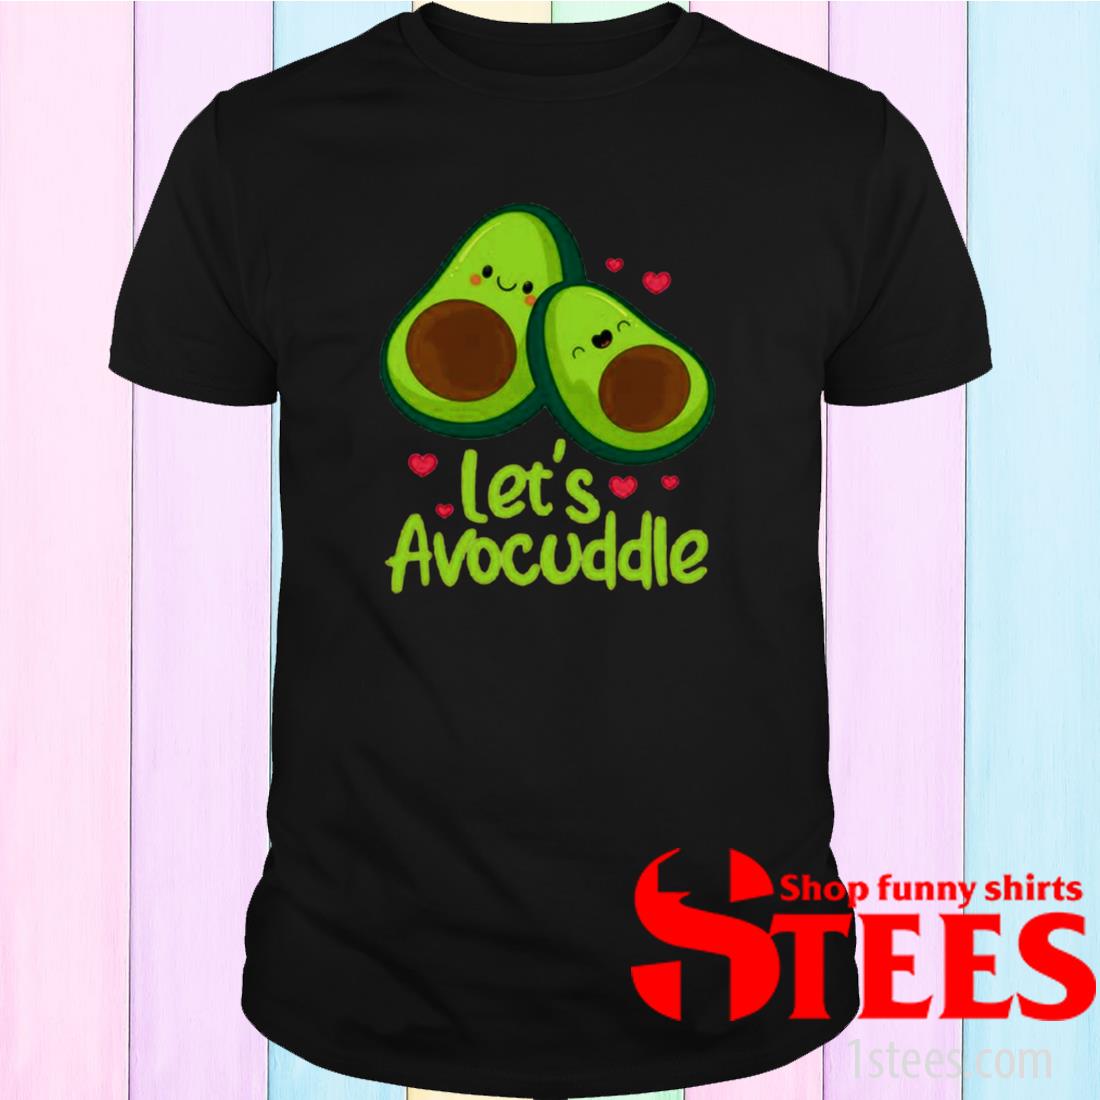 1Stees Let’s Avocuddle Cute Avocado Couple Valentine’s Day Kawaii